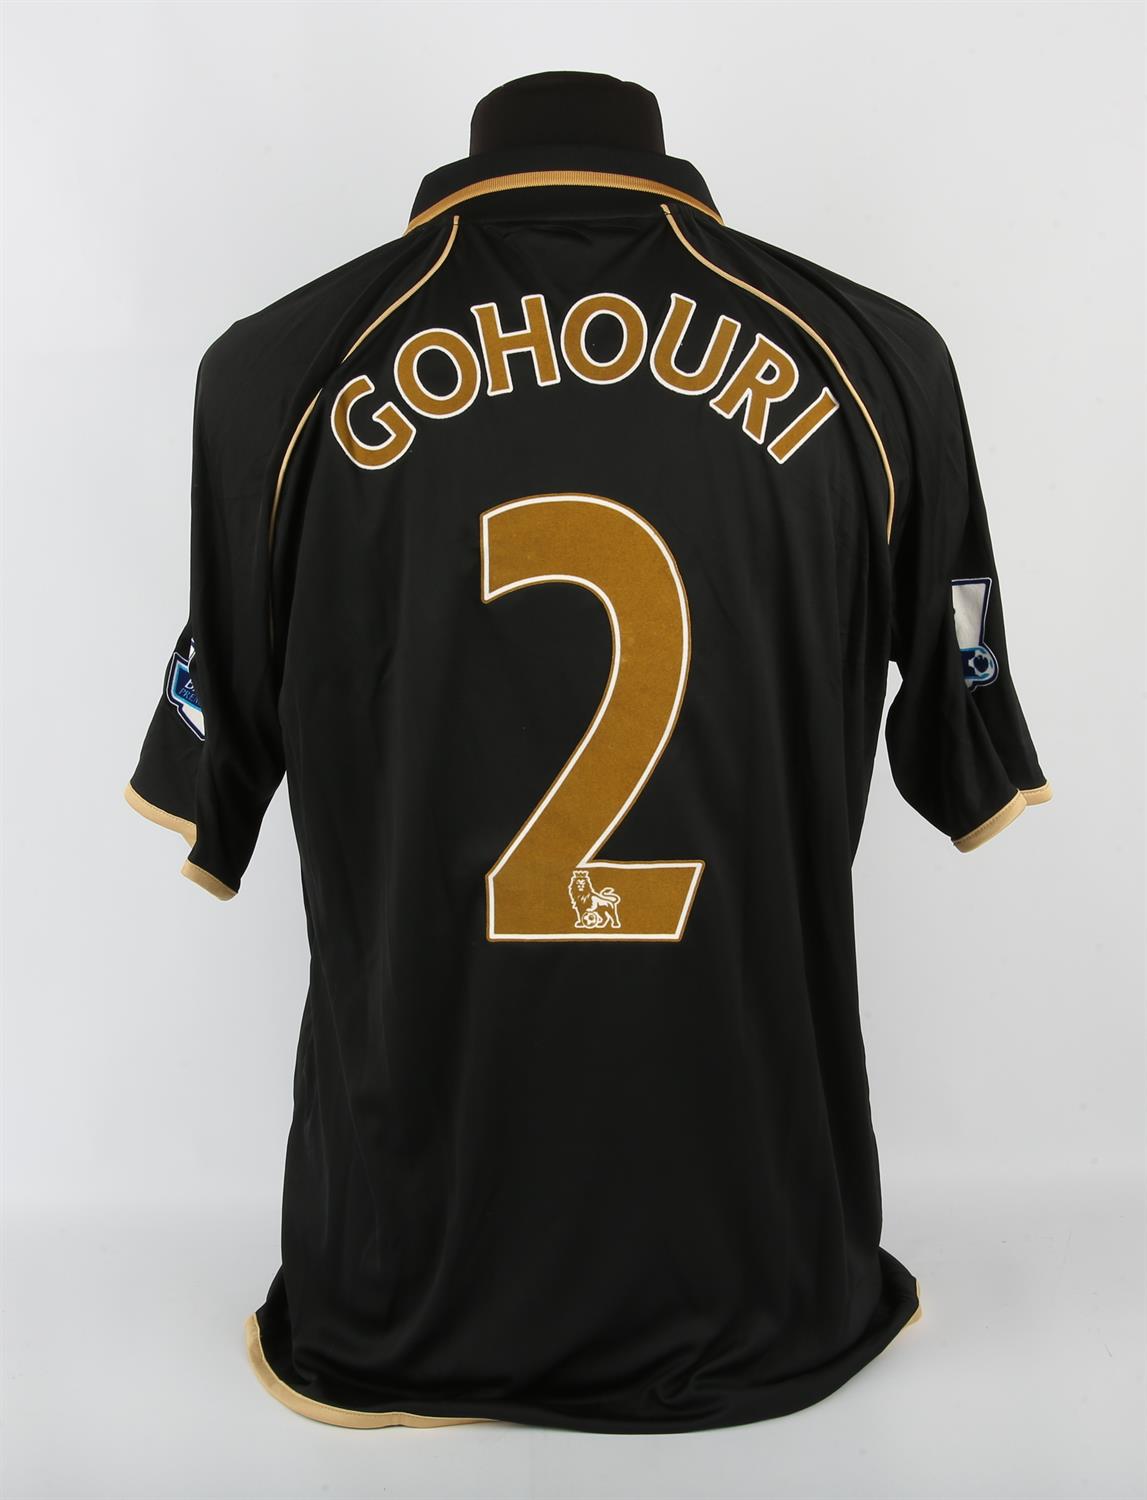 Wigan Athletic Football club, Gohouri (No.2) Season away shirt from 2010-2011, S/S.